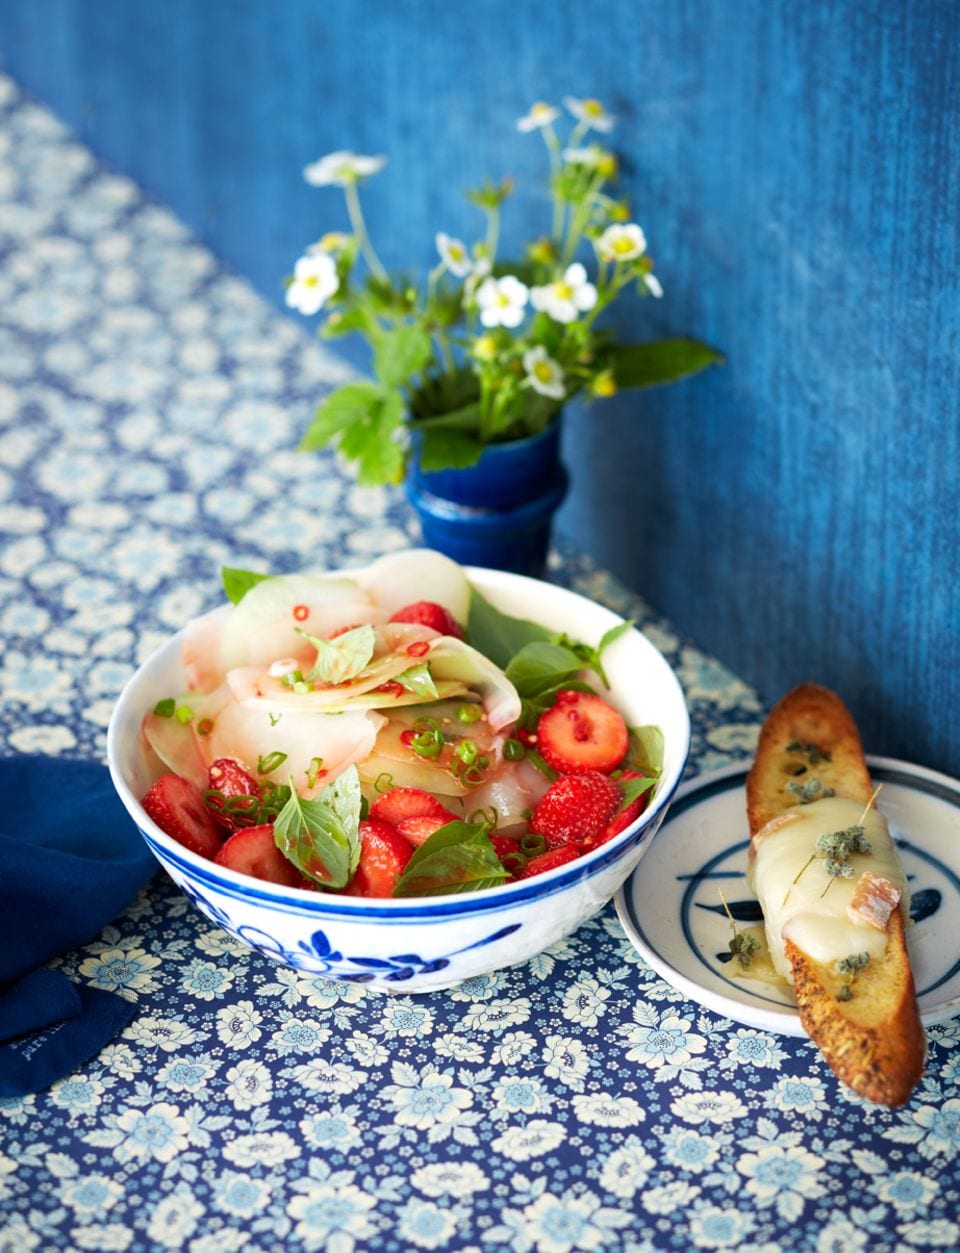 Rezept: Erdbeer-Kohlrabi-Salat mit Taleggio-Crostini